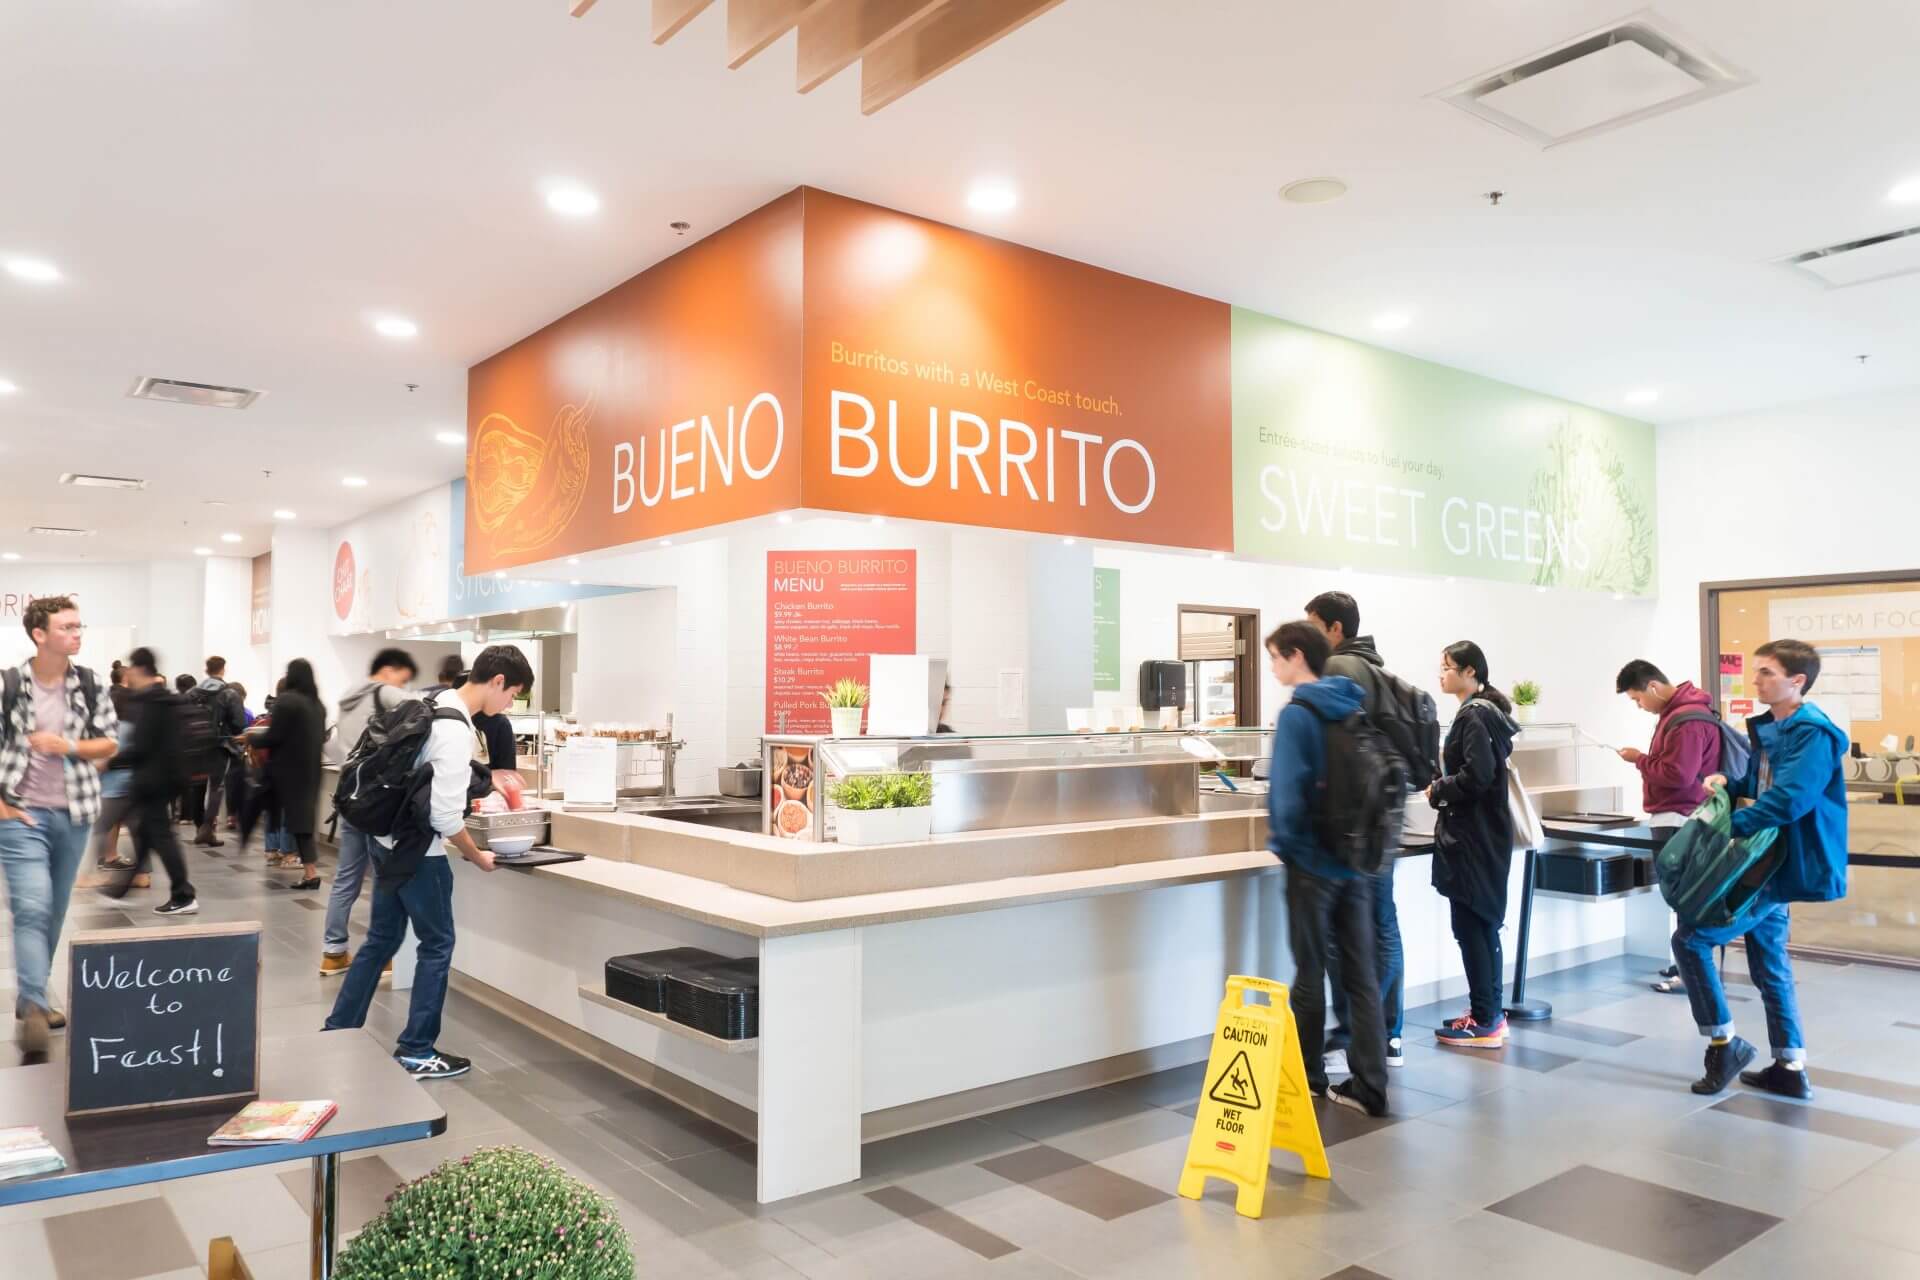 Bueno Burrito and Sweet Greens Stations